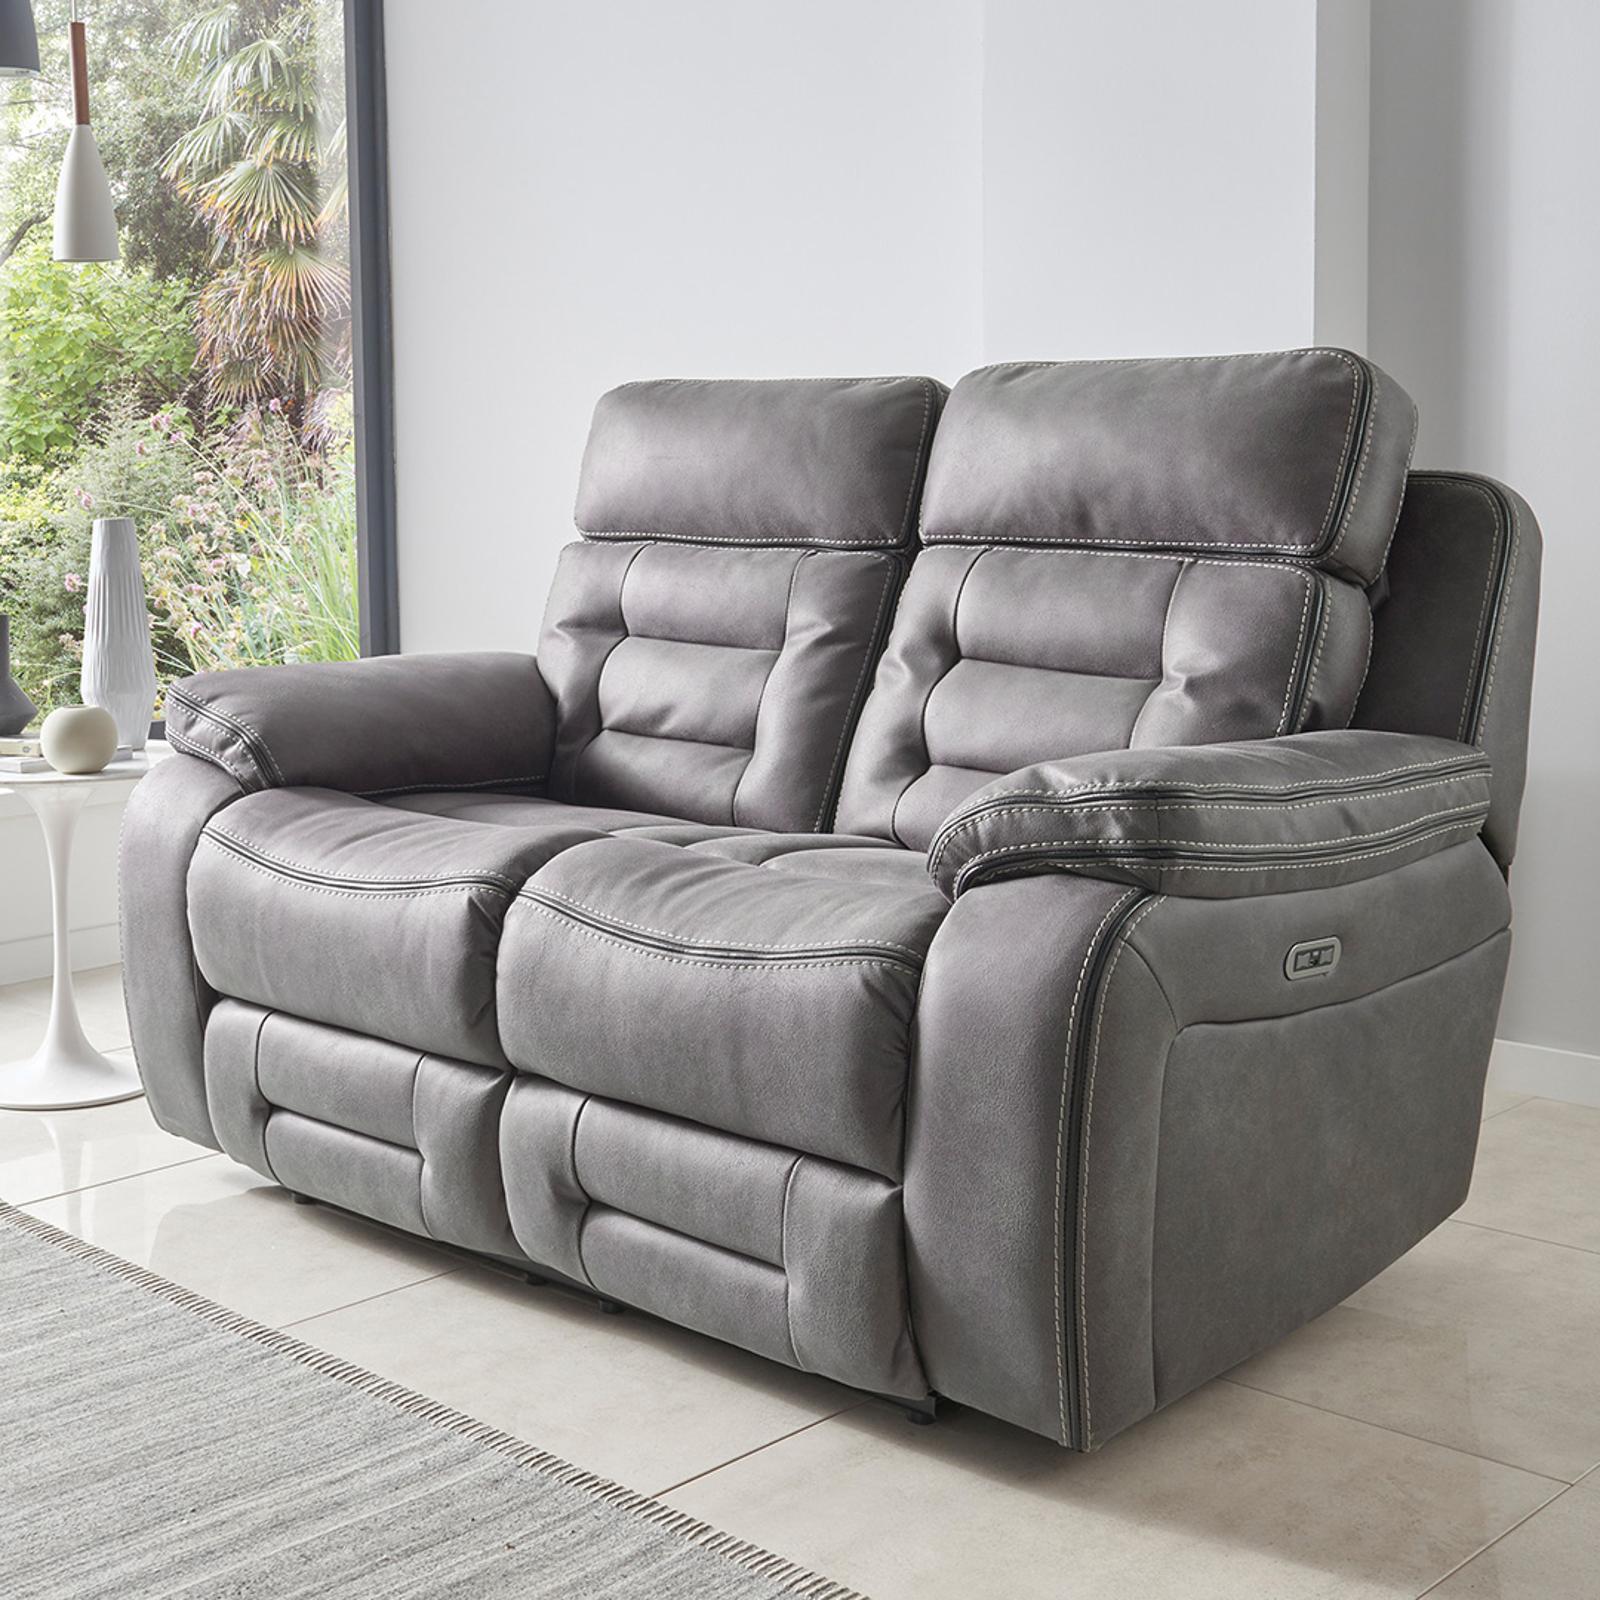 Tech Sofa 2 Seater - BrandAlley